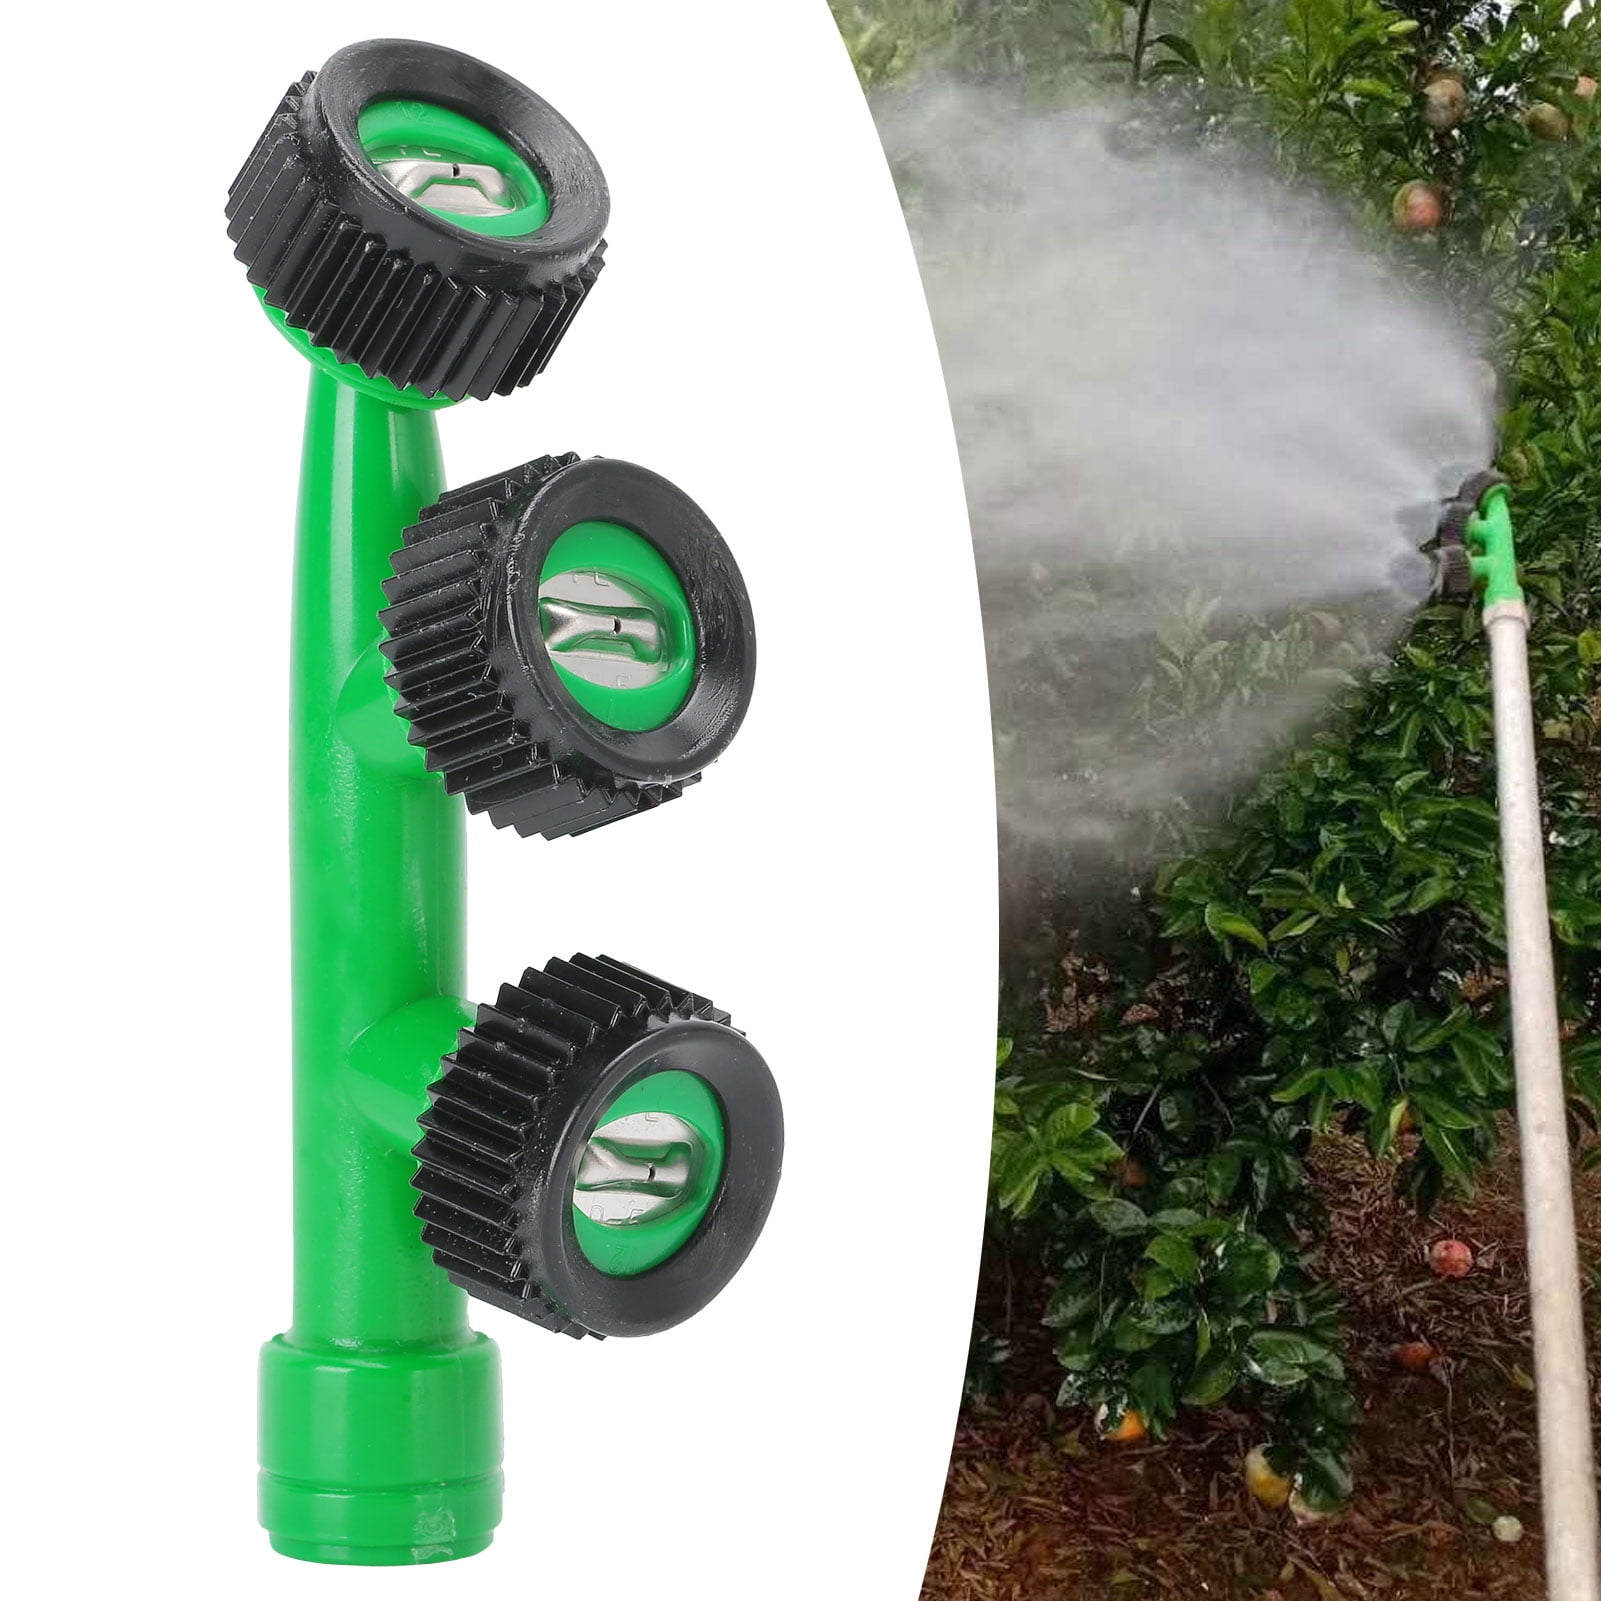 G3/8 DN10 Adjustable Washing Car Spray Nozzle Garden Sprayer Irrigation Tools 